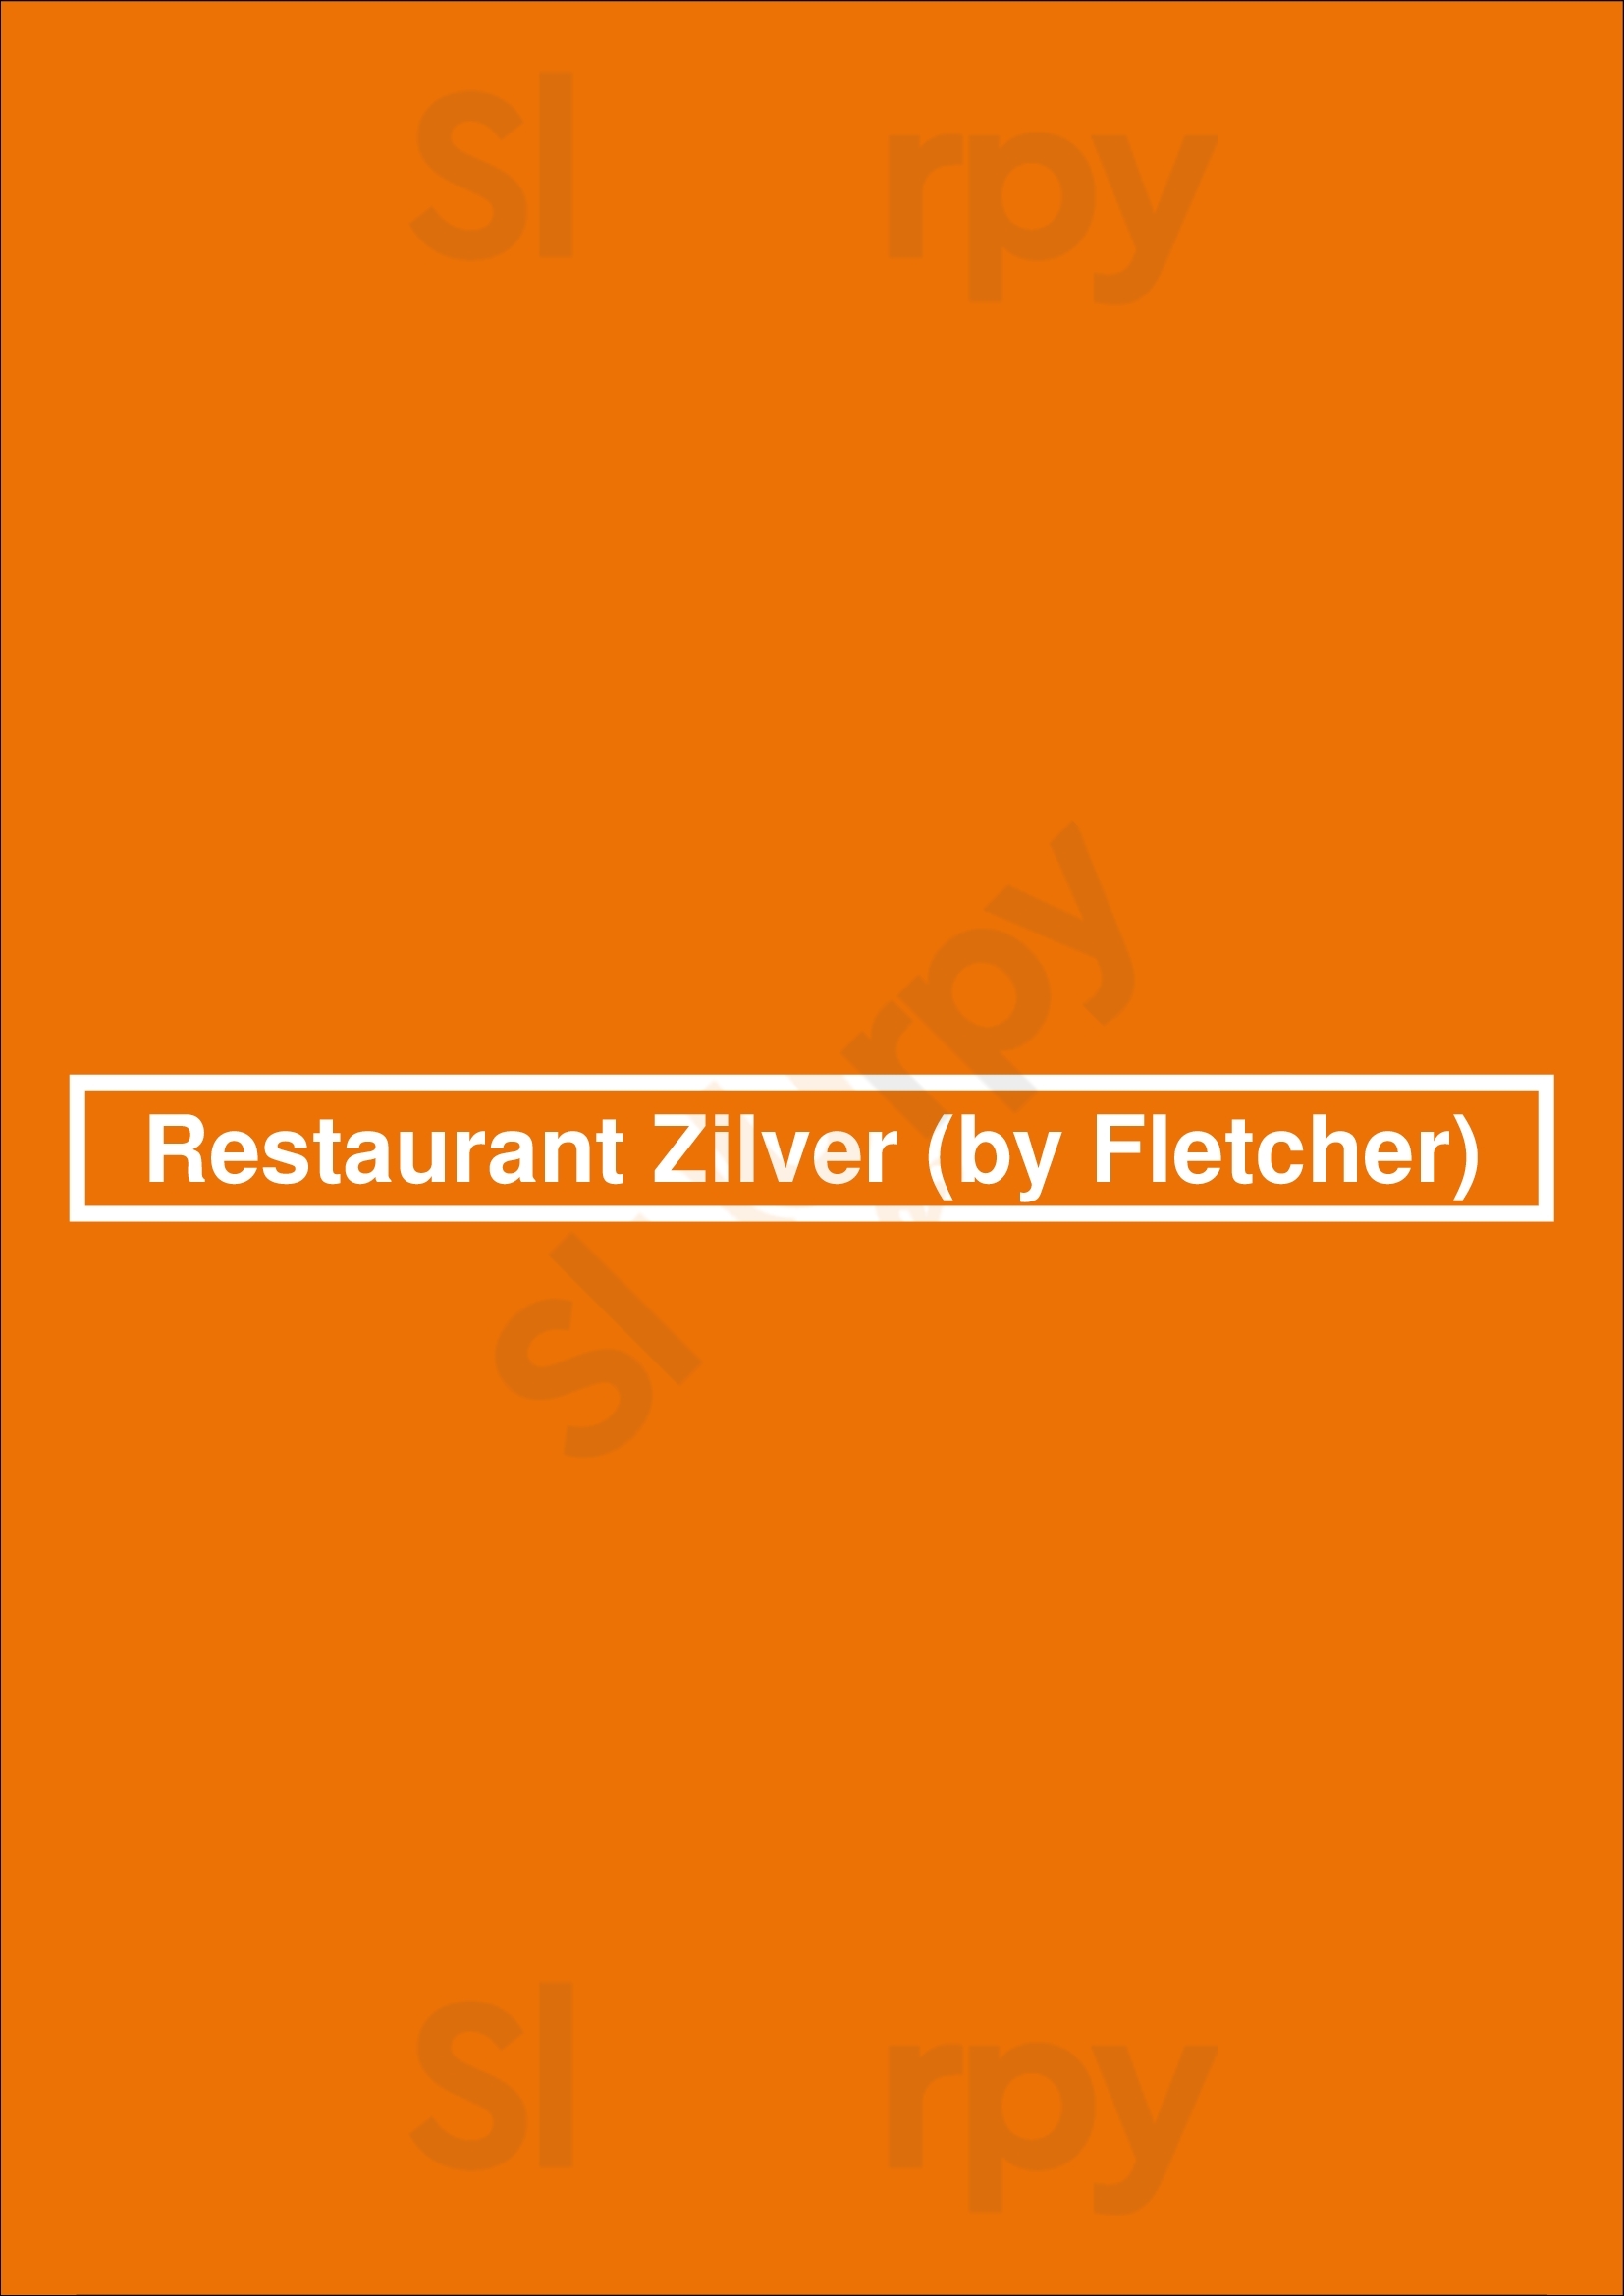 Restaurant Zilver (by Fletcher) Nieuwegein Menu - 1